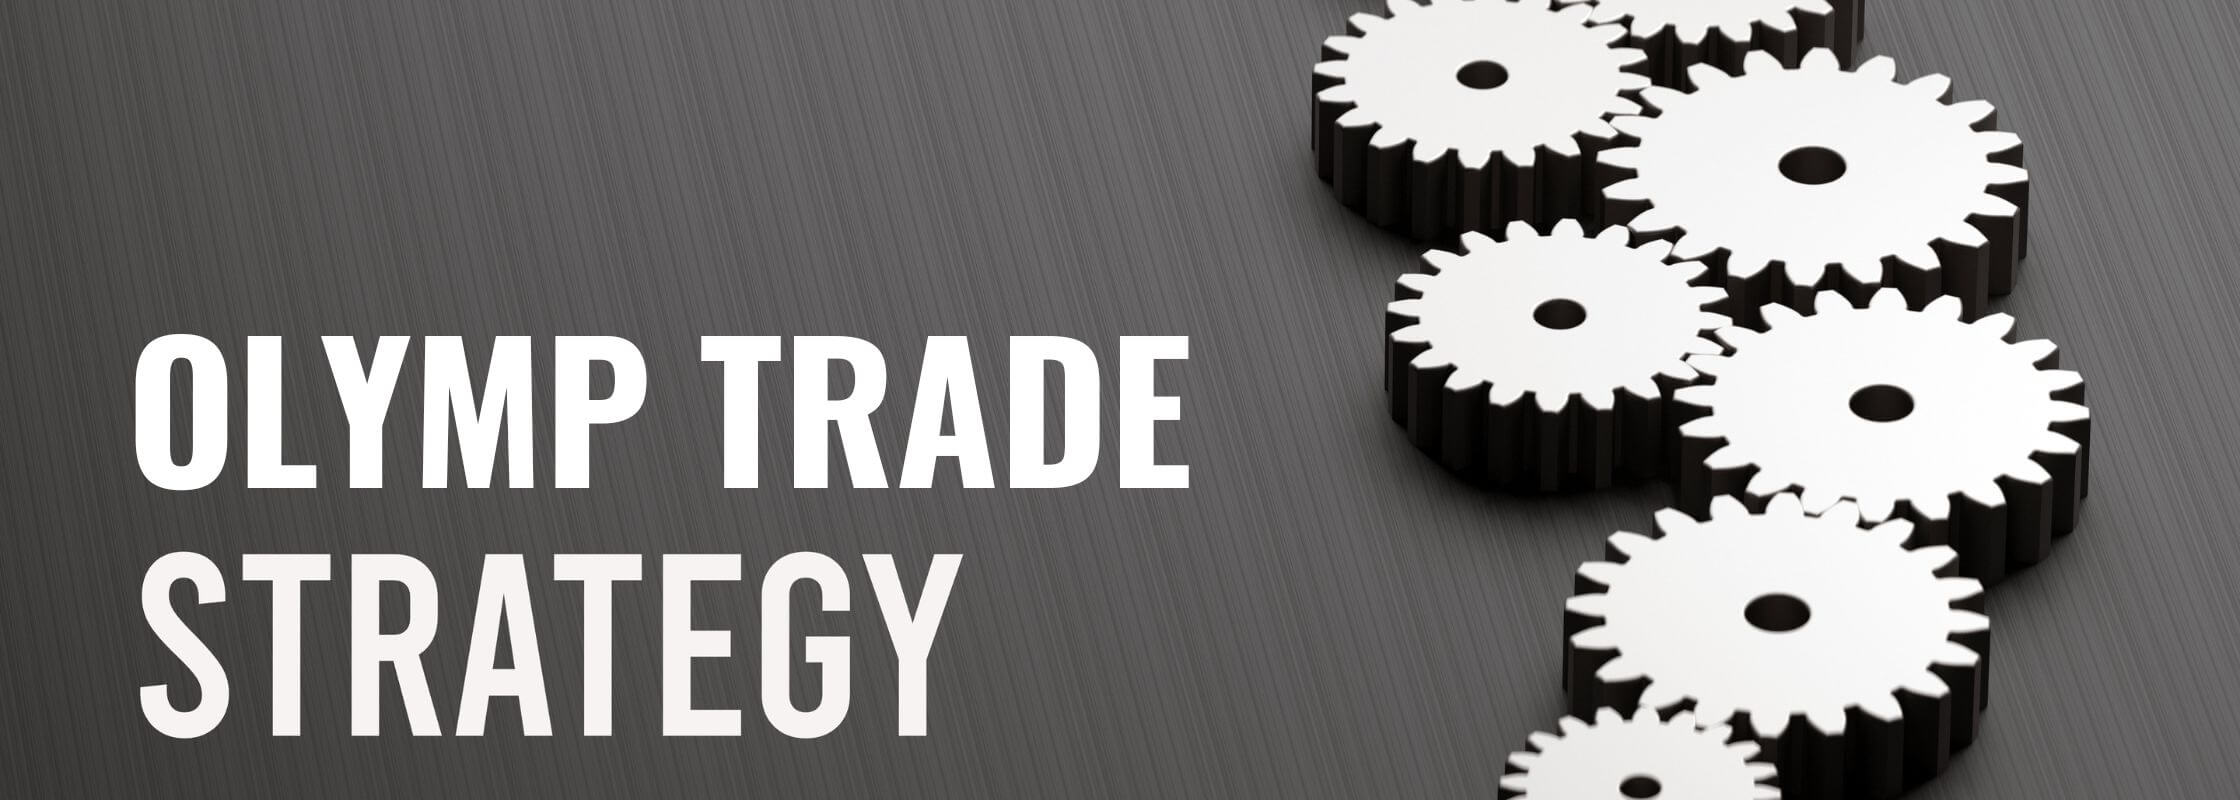 Olymp Trade Strategi